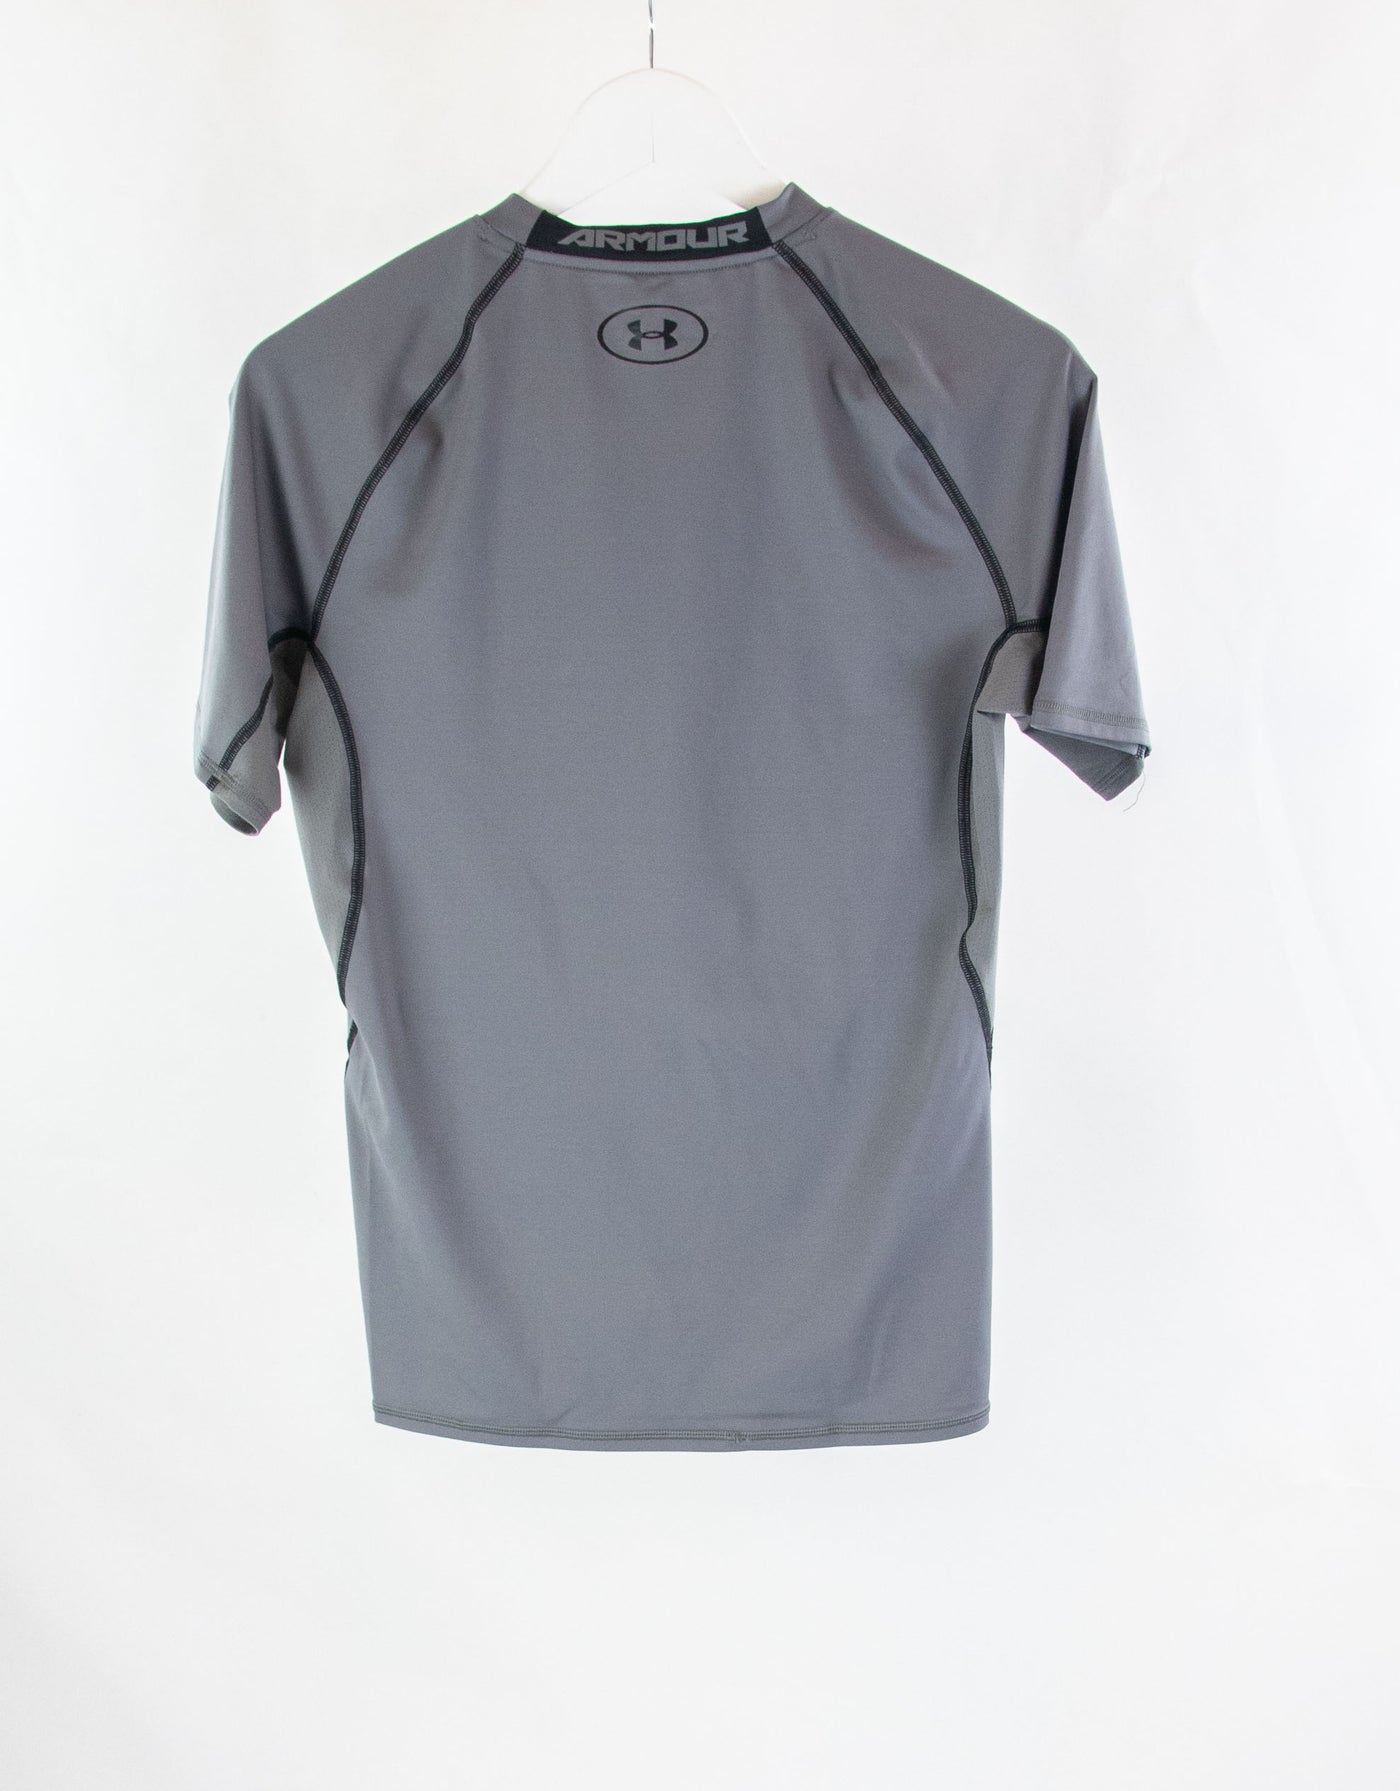 Camiseta gris deportiva ARMOUR